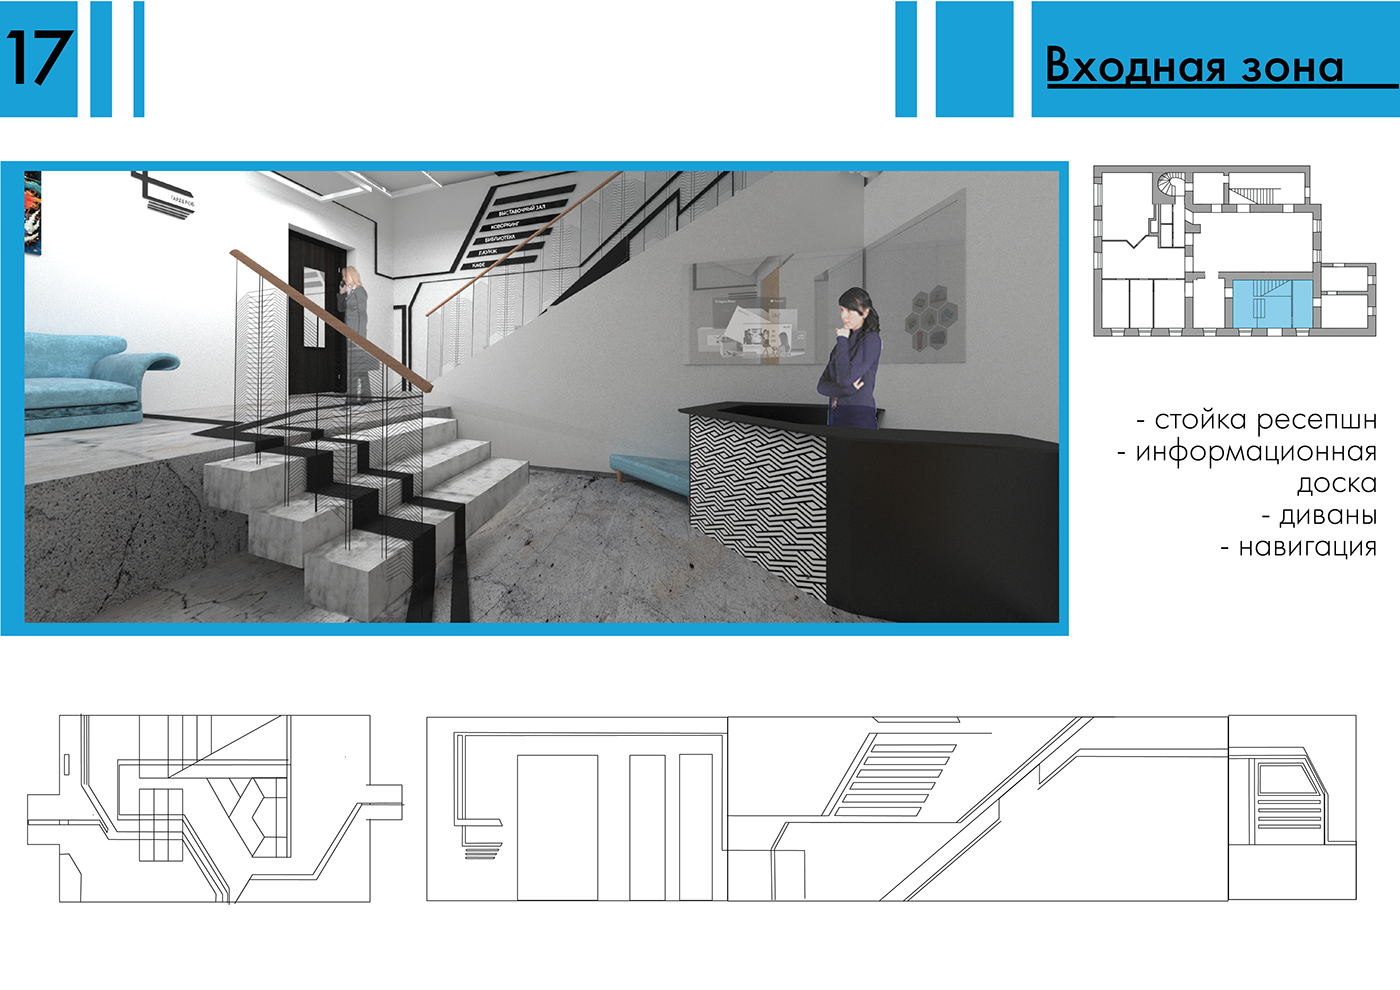 Interior интерьер архитектура презентация presentation coworking lounge vizualisation коворкинг визуализация